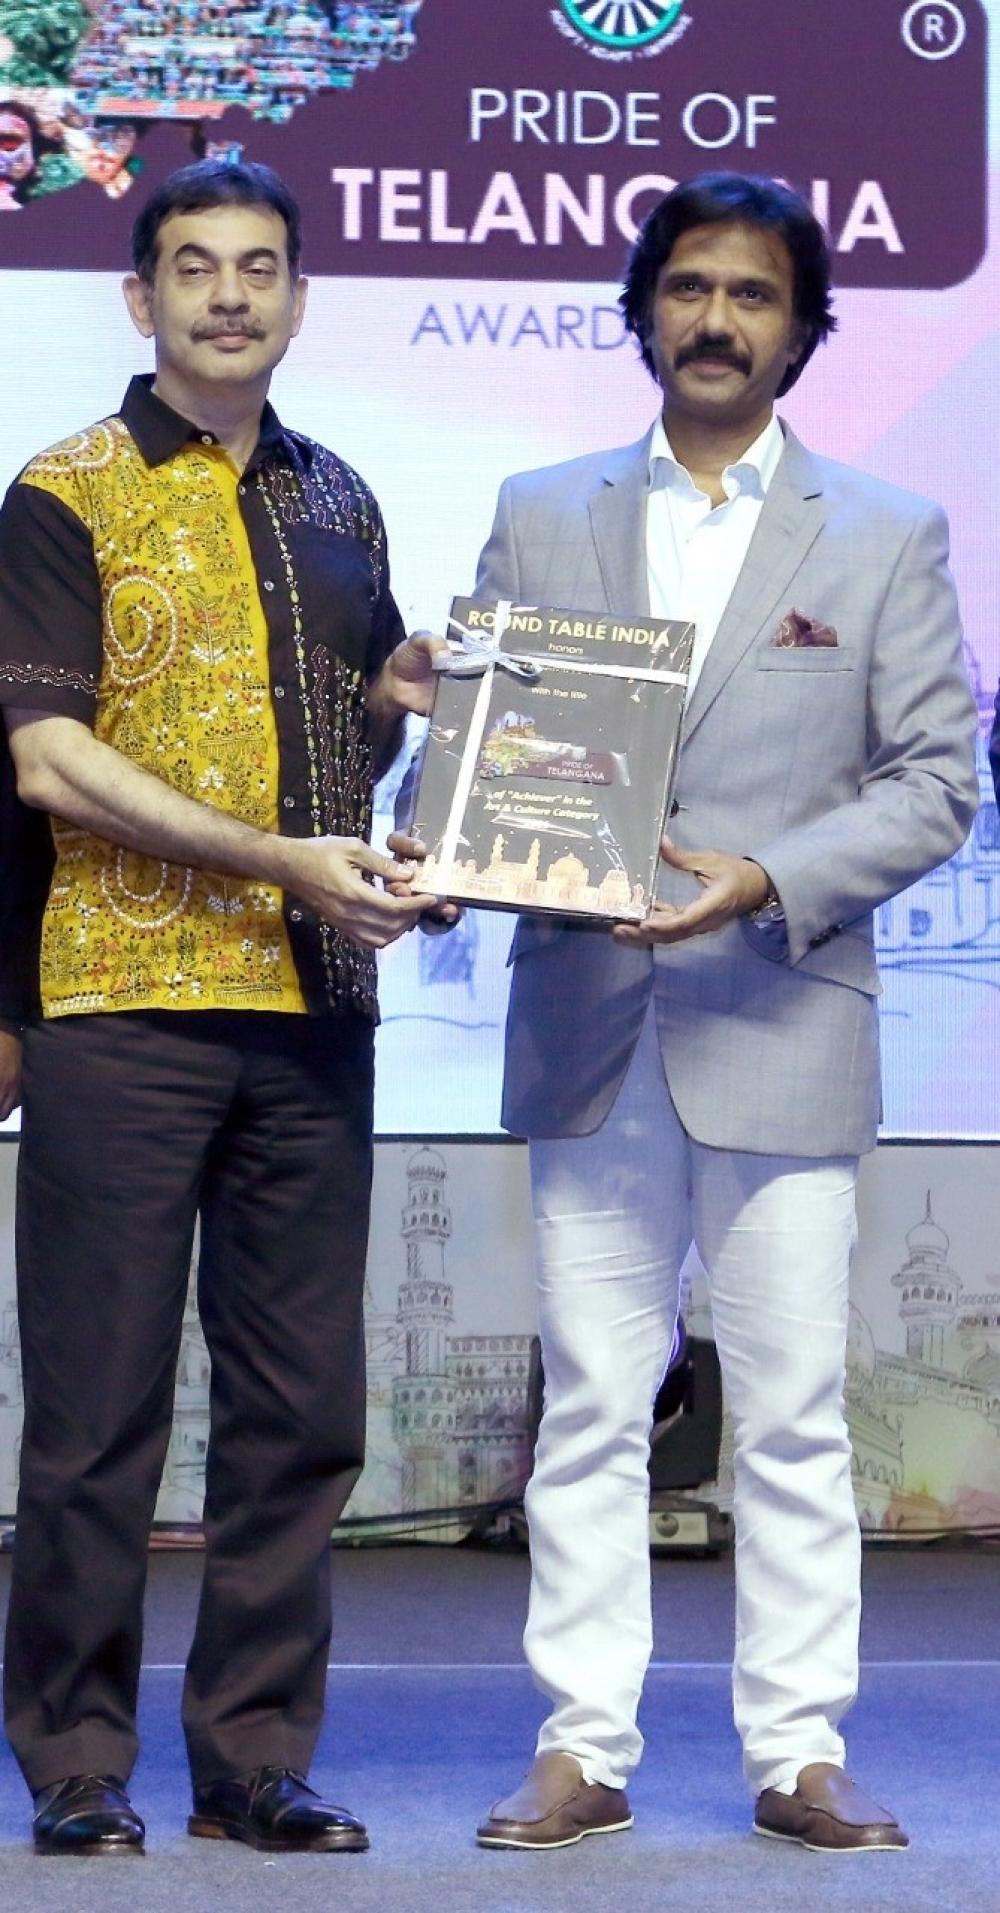 The Weekend Leader - Mohammad Ali Baig receives 'Pride of Telangana' award